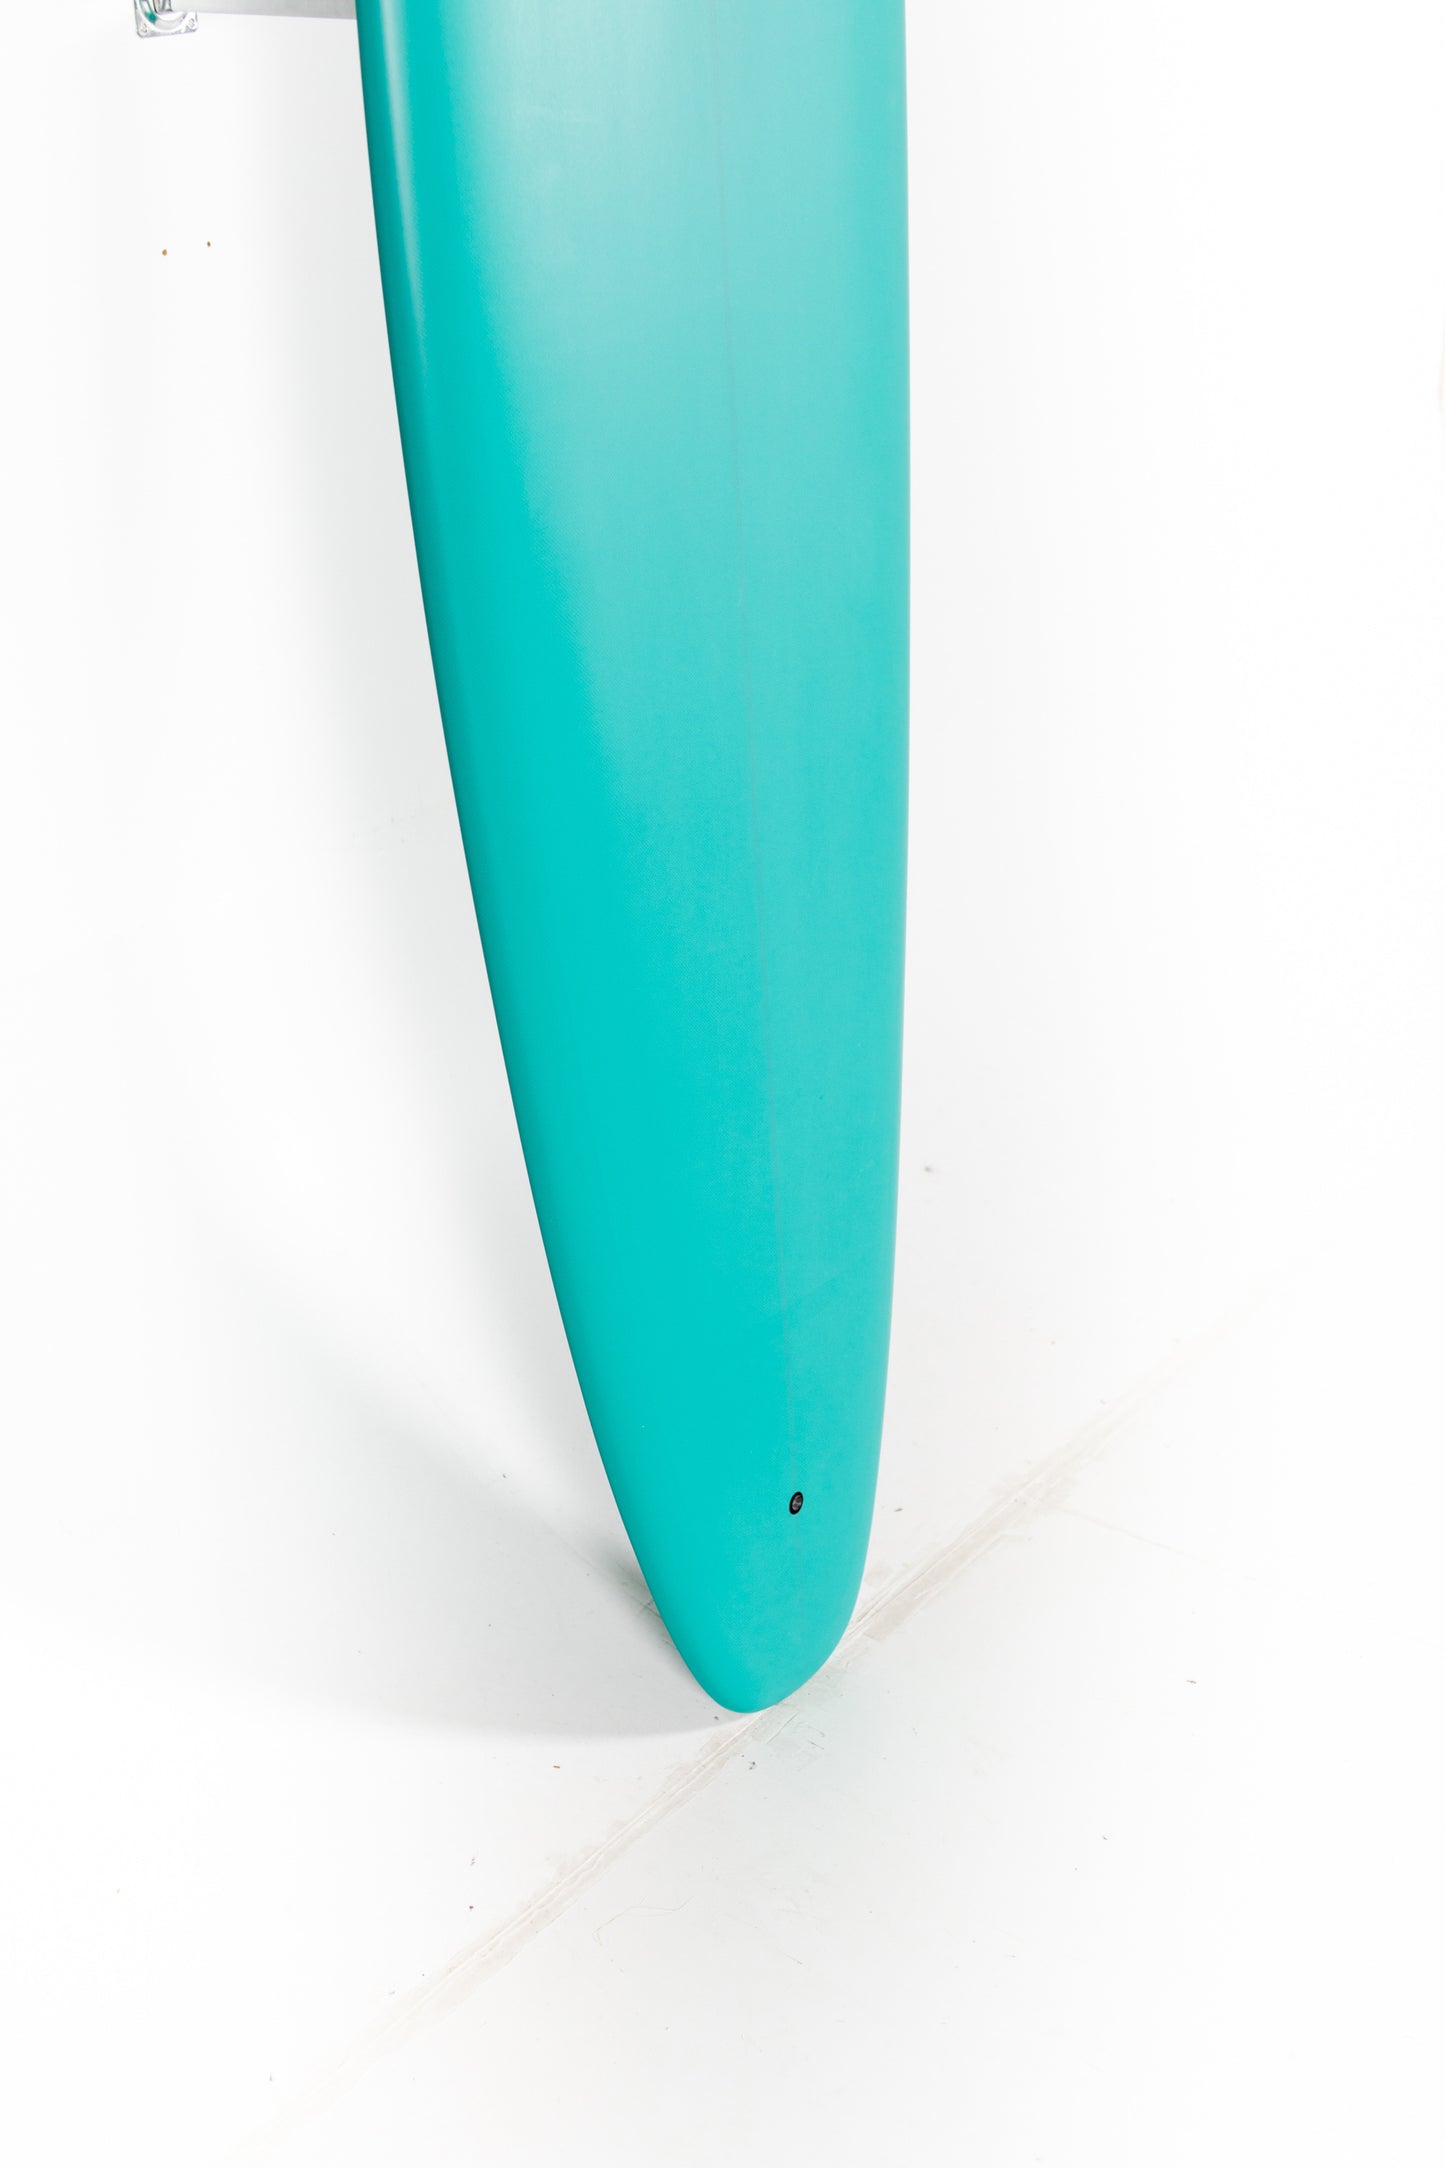 
                  
                    Pukas Surf Shop - Christenson Surfboards - FLAT TRACKER 2.0 - 7'6" x 21 1/4 x 2 7/8 - CX03152
                  
                